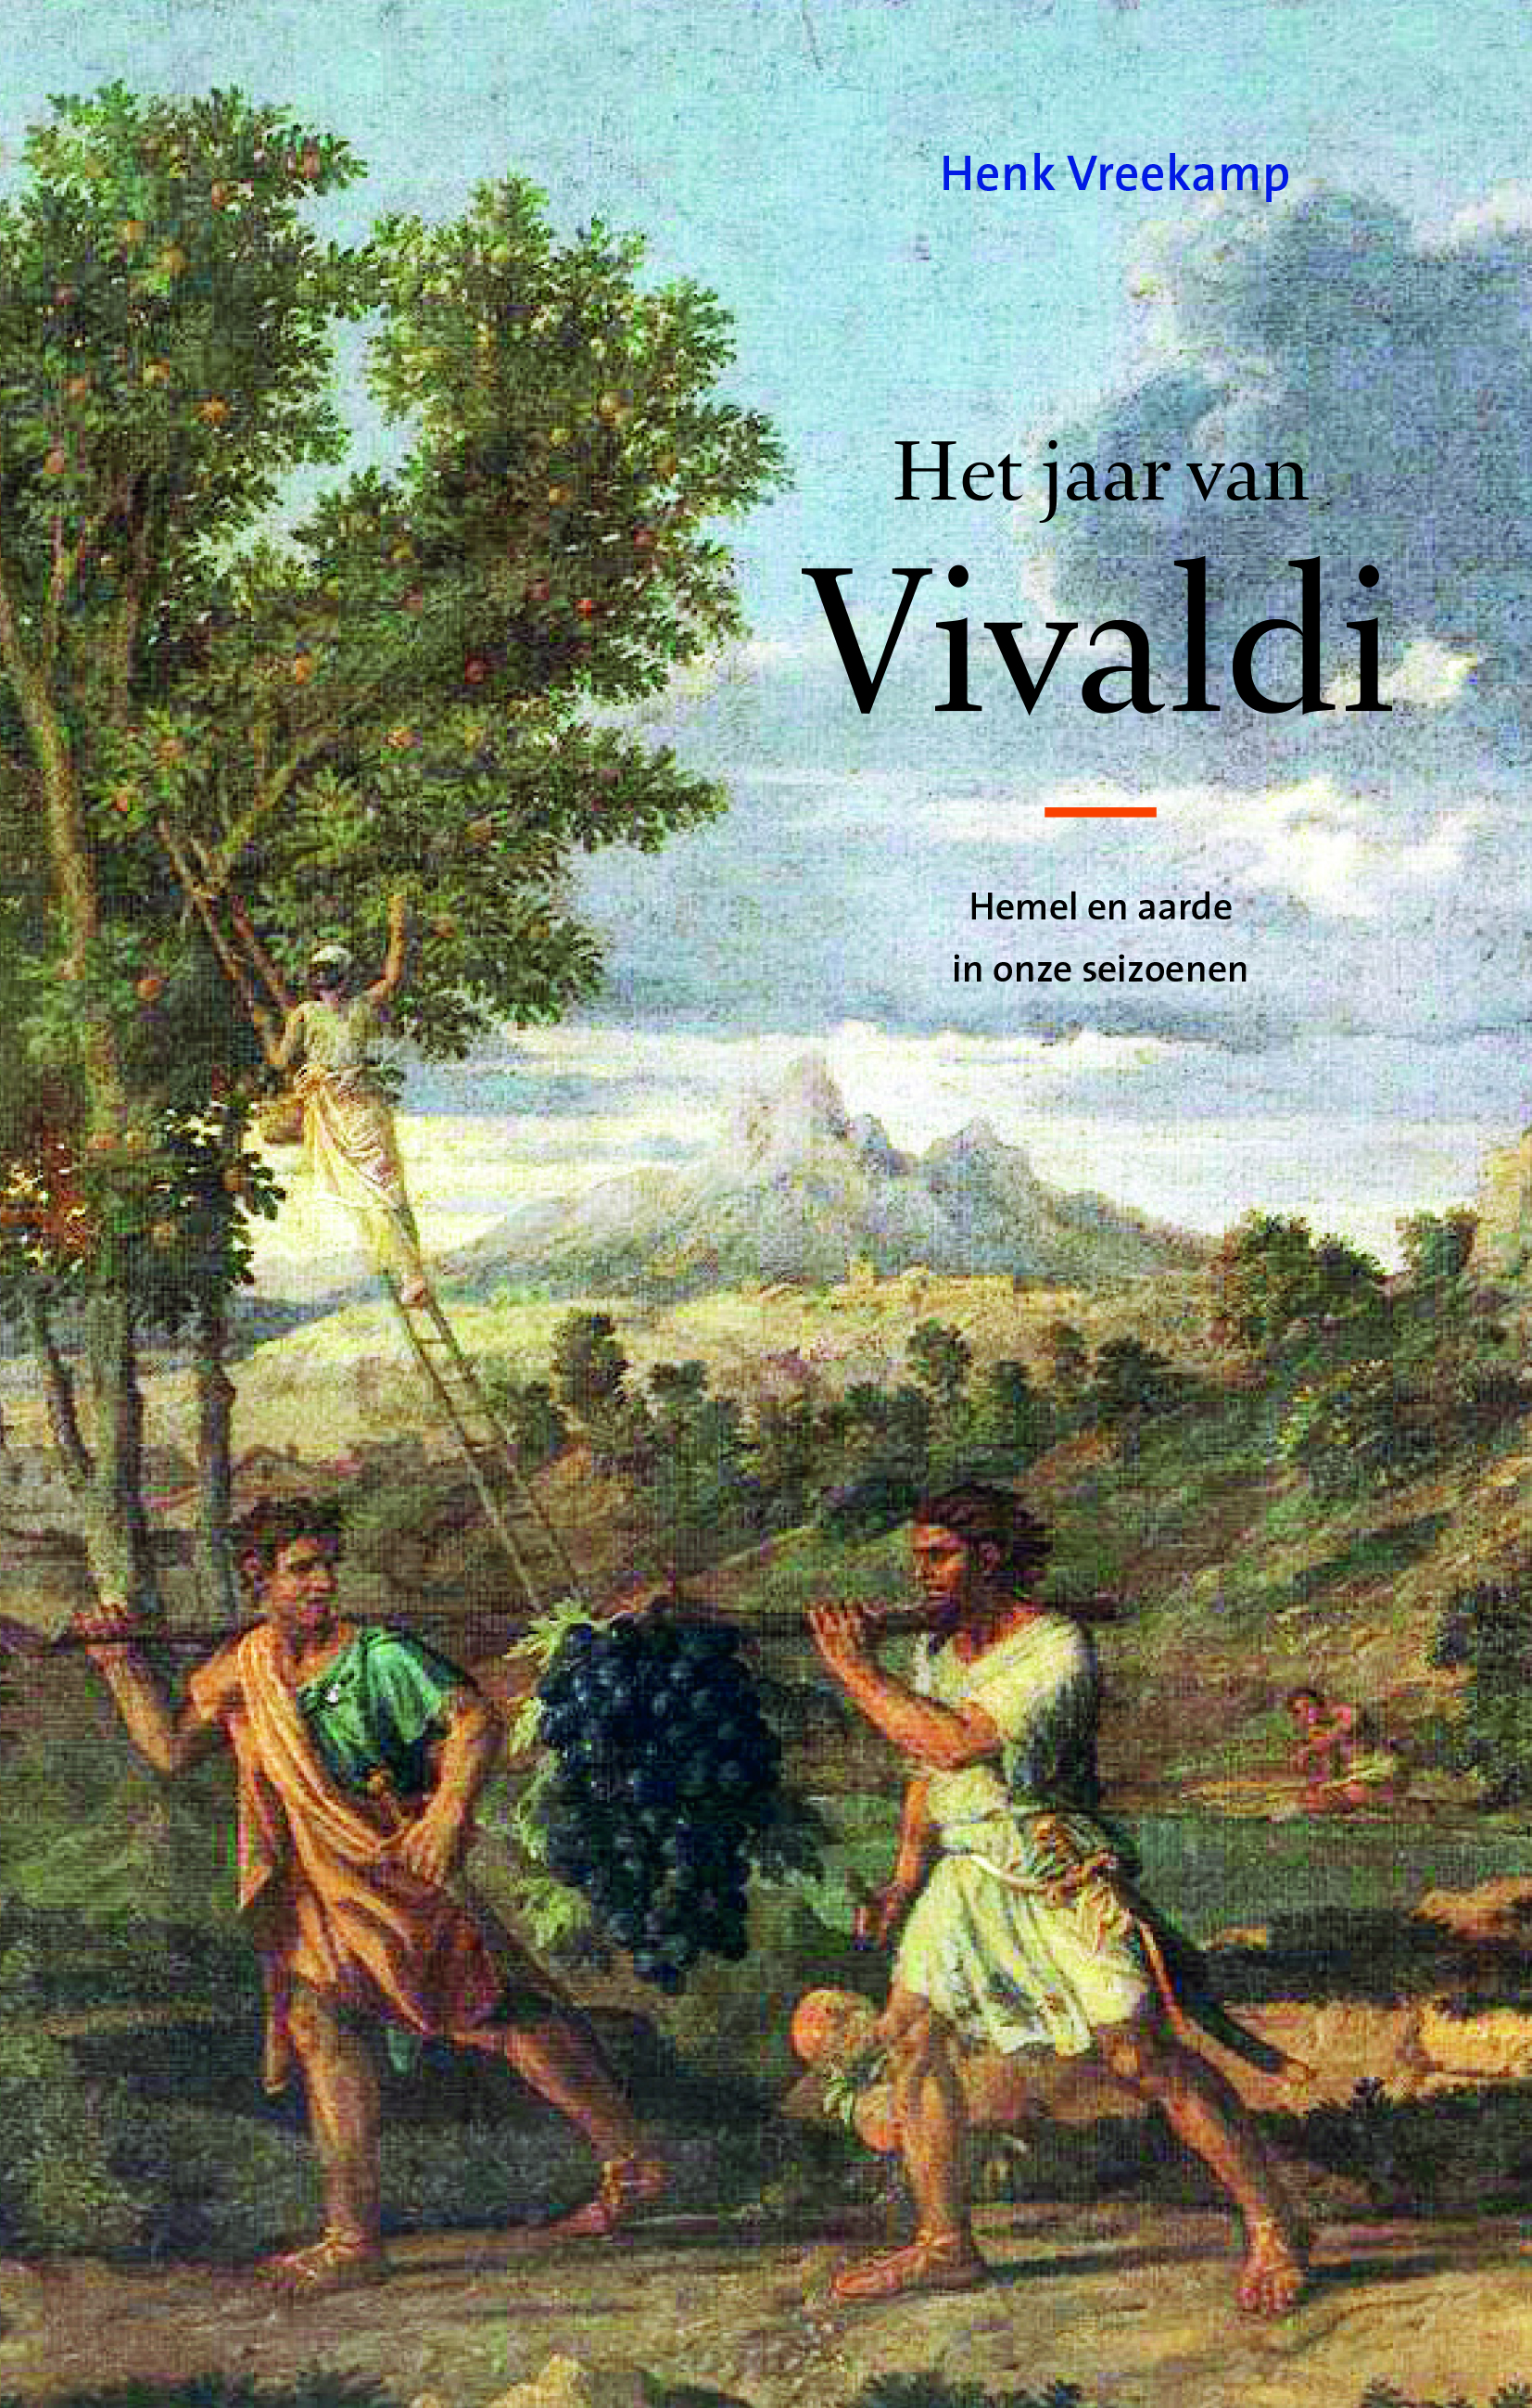 2. Het jaar van Vivaldi kokBOvivaldi 300dpi